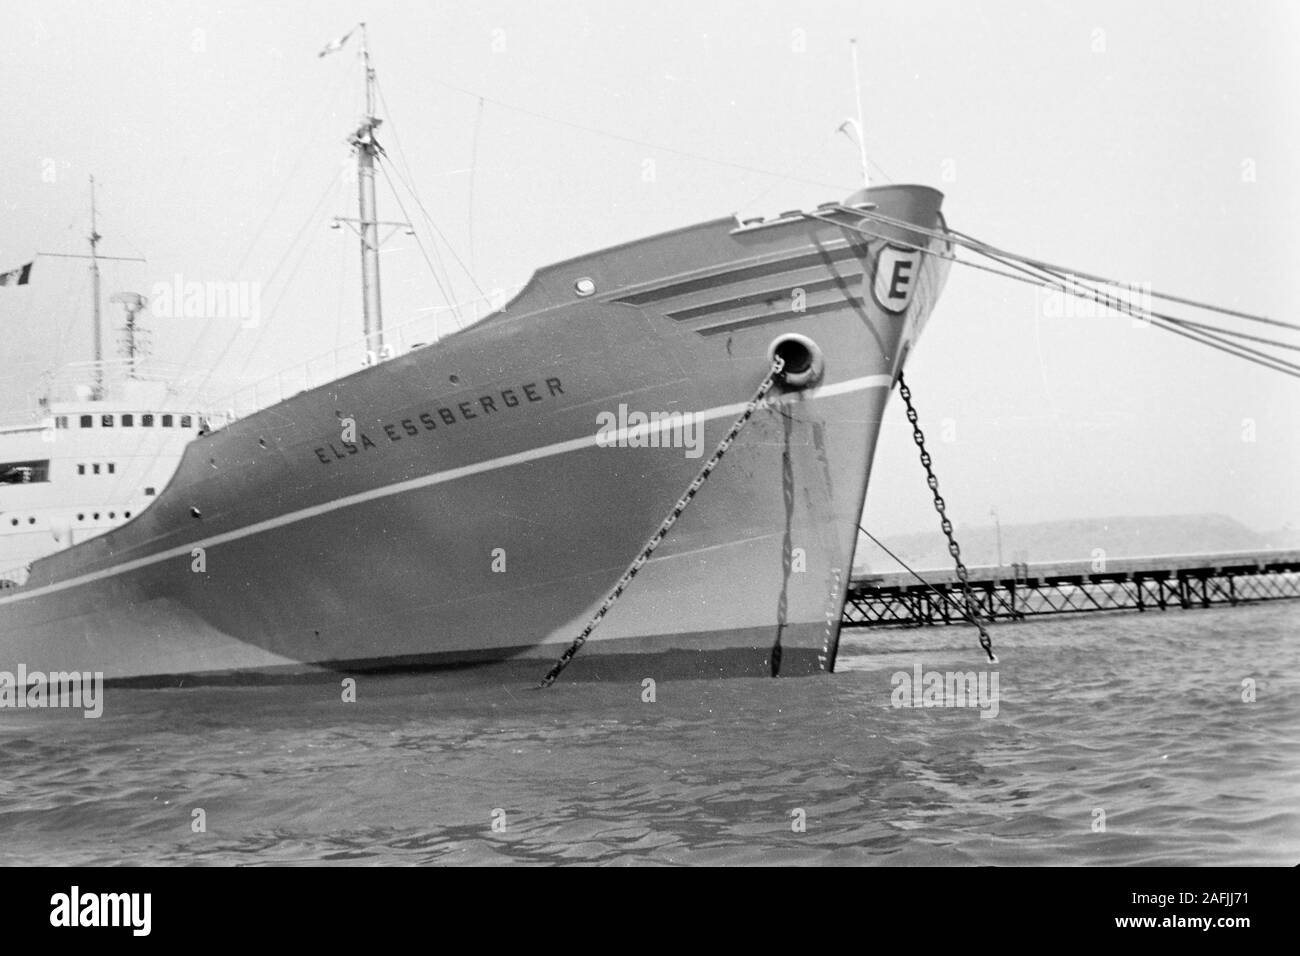 Schiff 'Elsa Essberger' vor Anker vor dem Panamakanal, Panama 1955. Vessel 'Elsa Essberger' anchoring near the Panama Canal, Panama 1955. Stock Photo